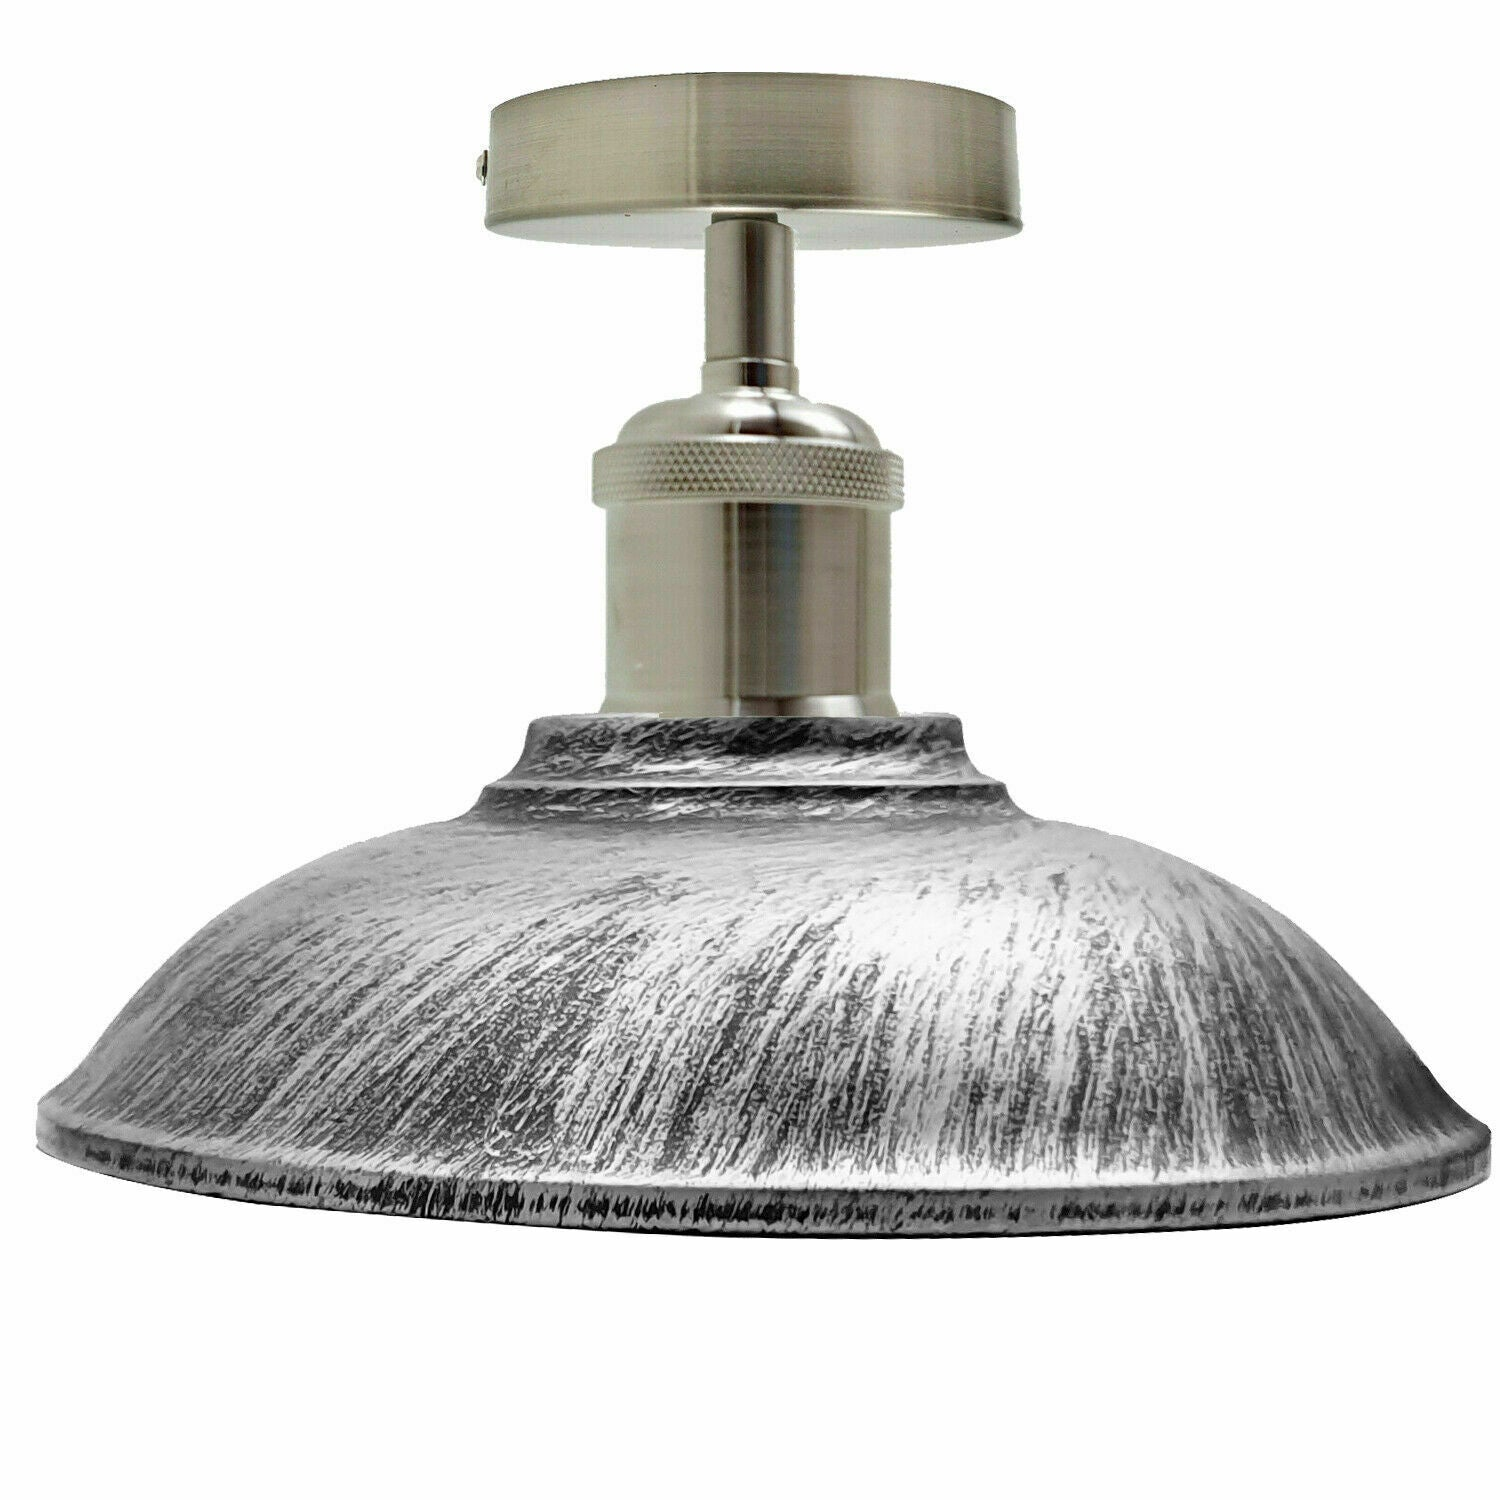 Vintage Industrial Metal Light Shades Ceiling Pendant Light For Bed Room, Guestroom, Living Room, Kitchen